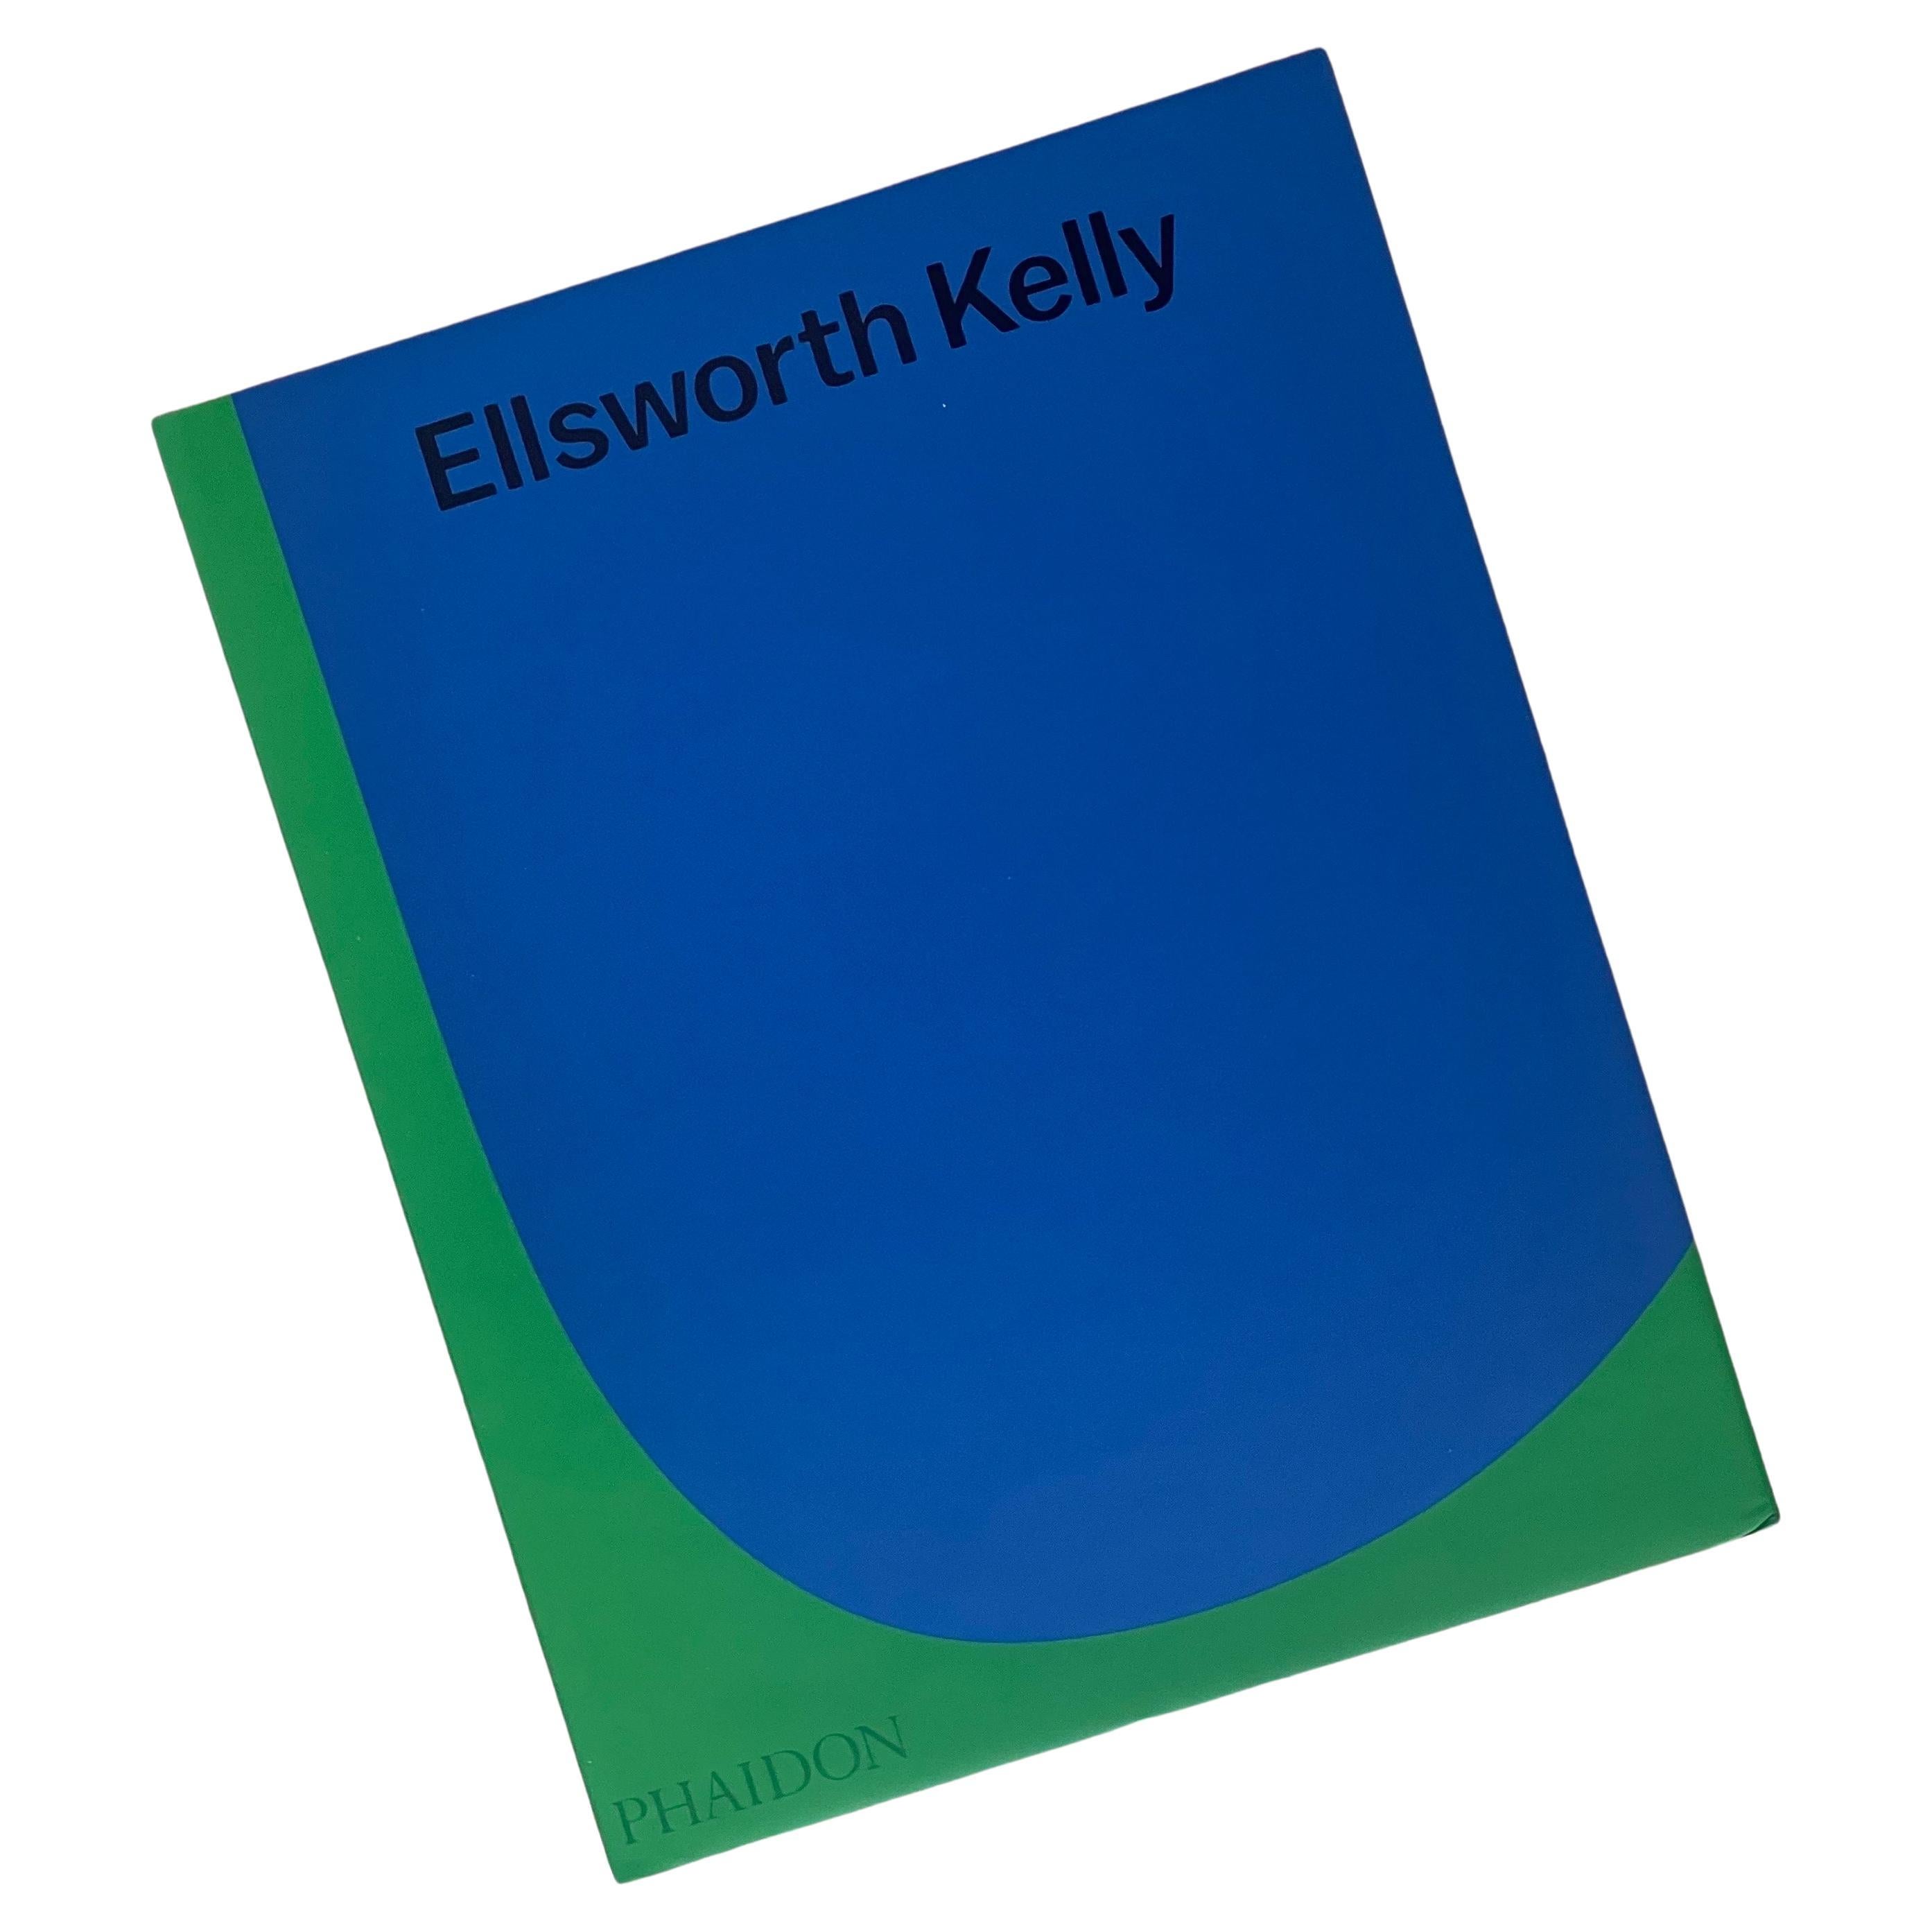 "Ellsworth Kelly" Art Book by Tricia Y. Paik